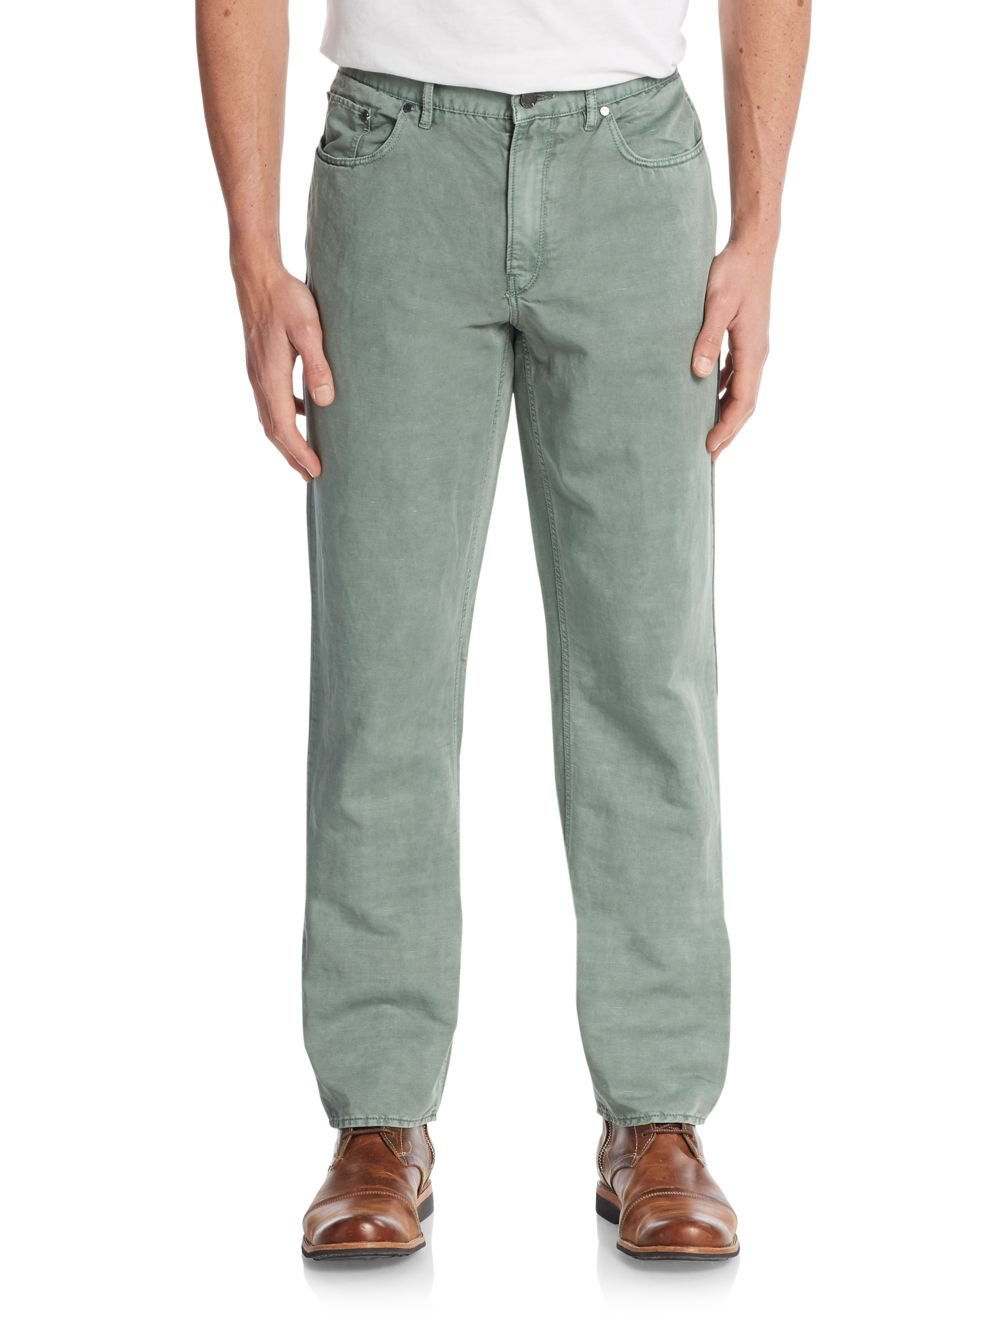 Lyst - Michael Kors Tailored Straight-leg Cotton & Linen Jeans in Green ...